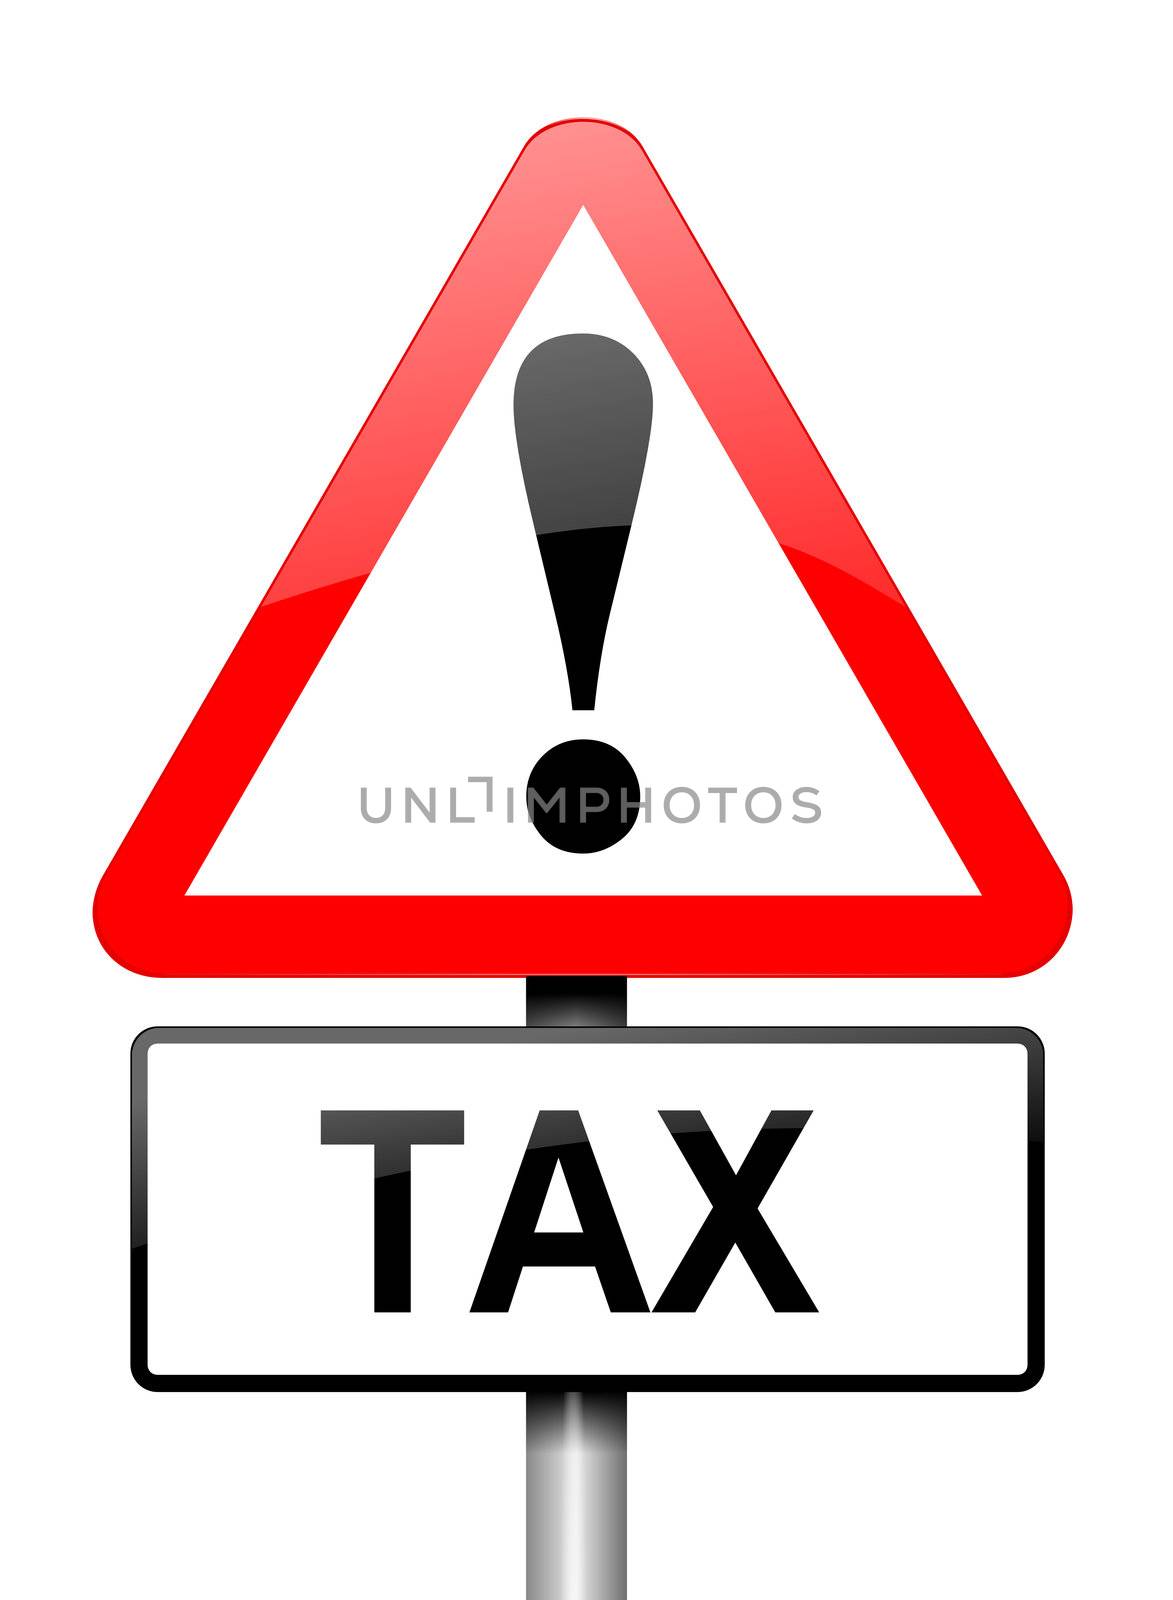 Tax warning. by 72soul